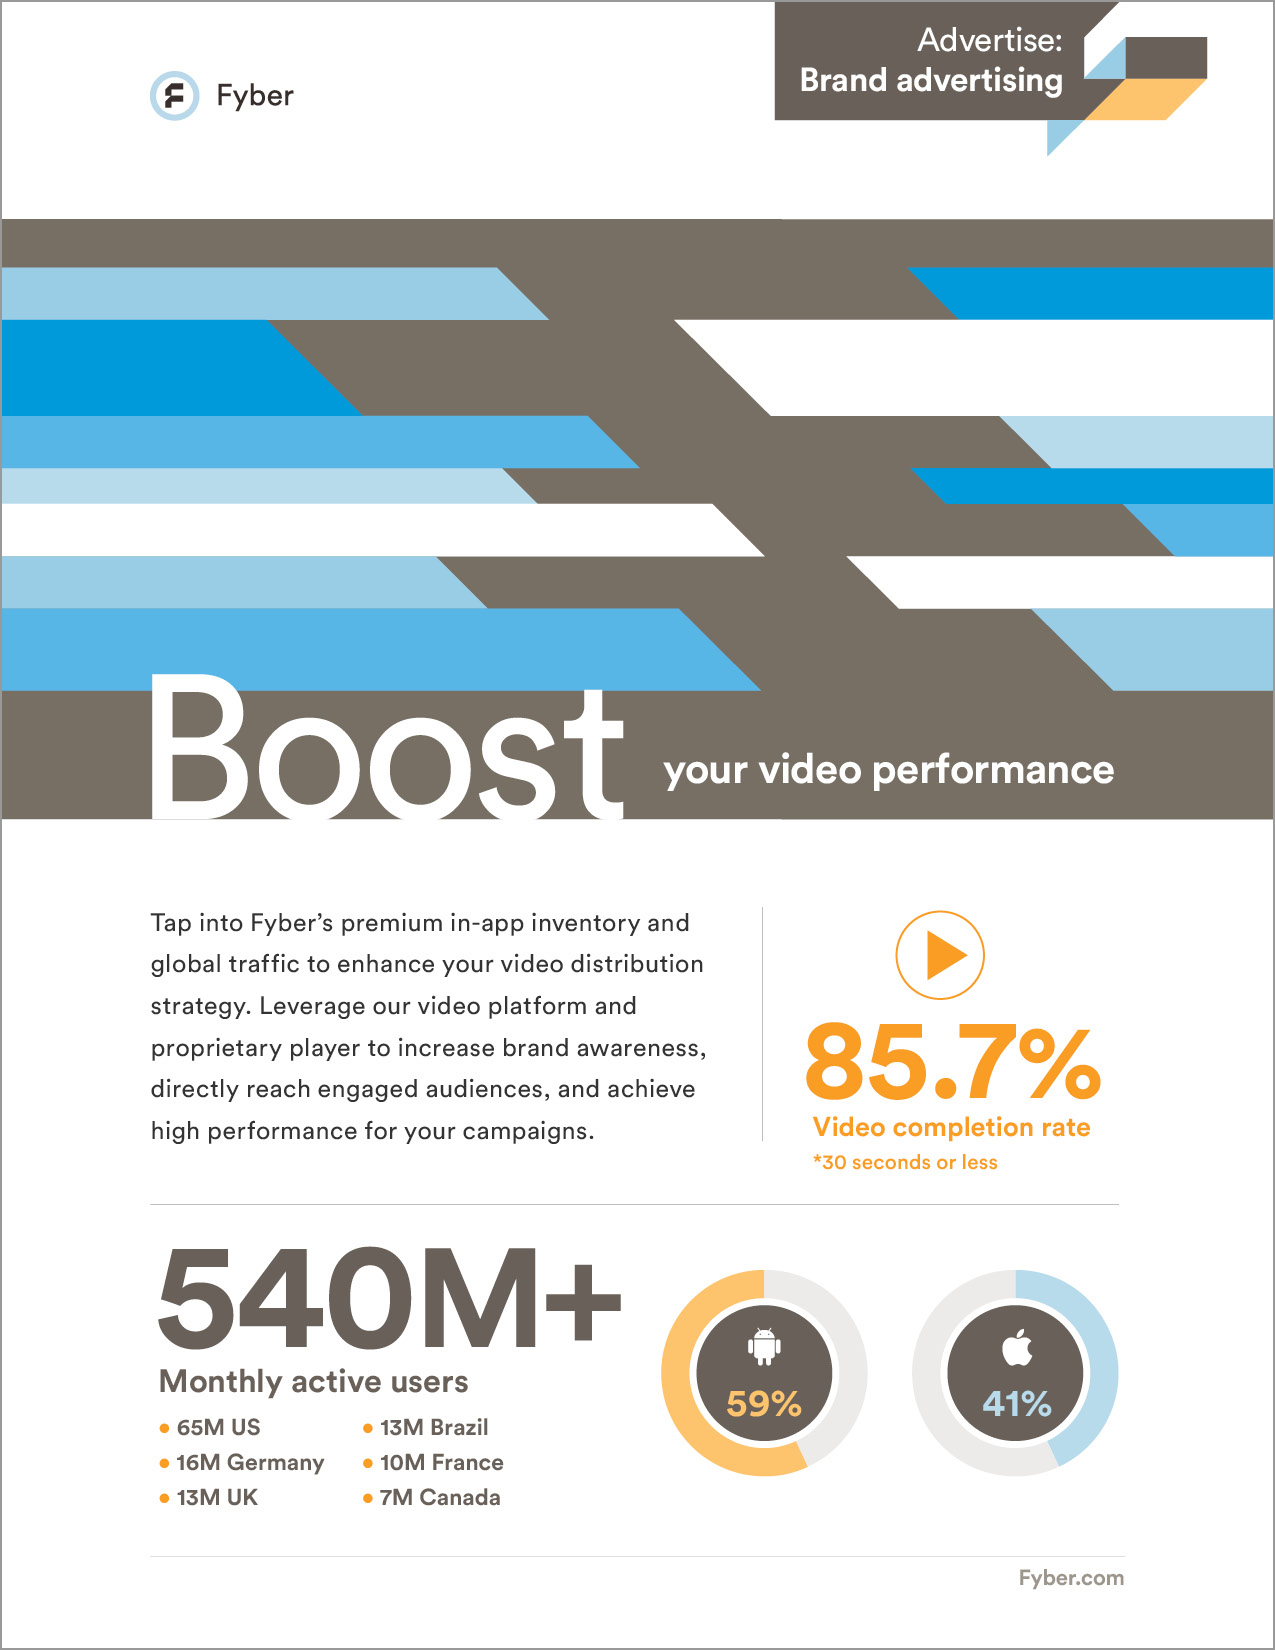 Mobile Video Advertising for Brands